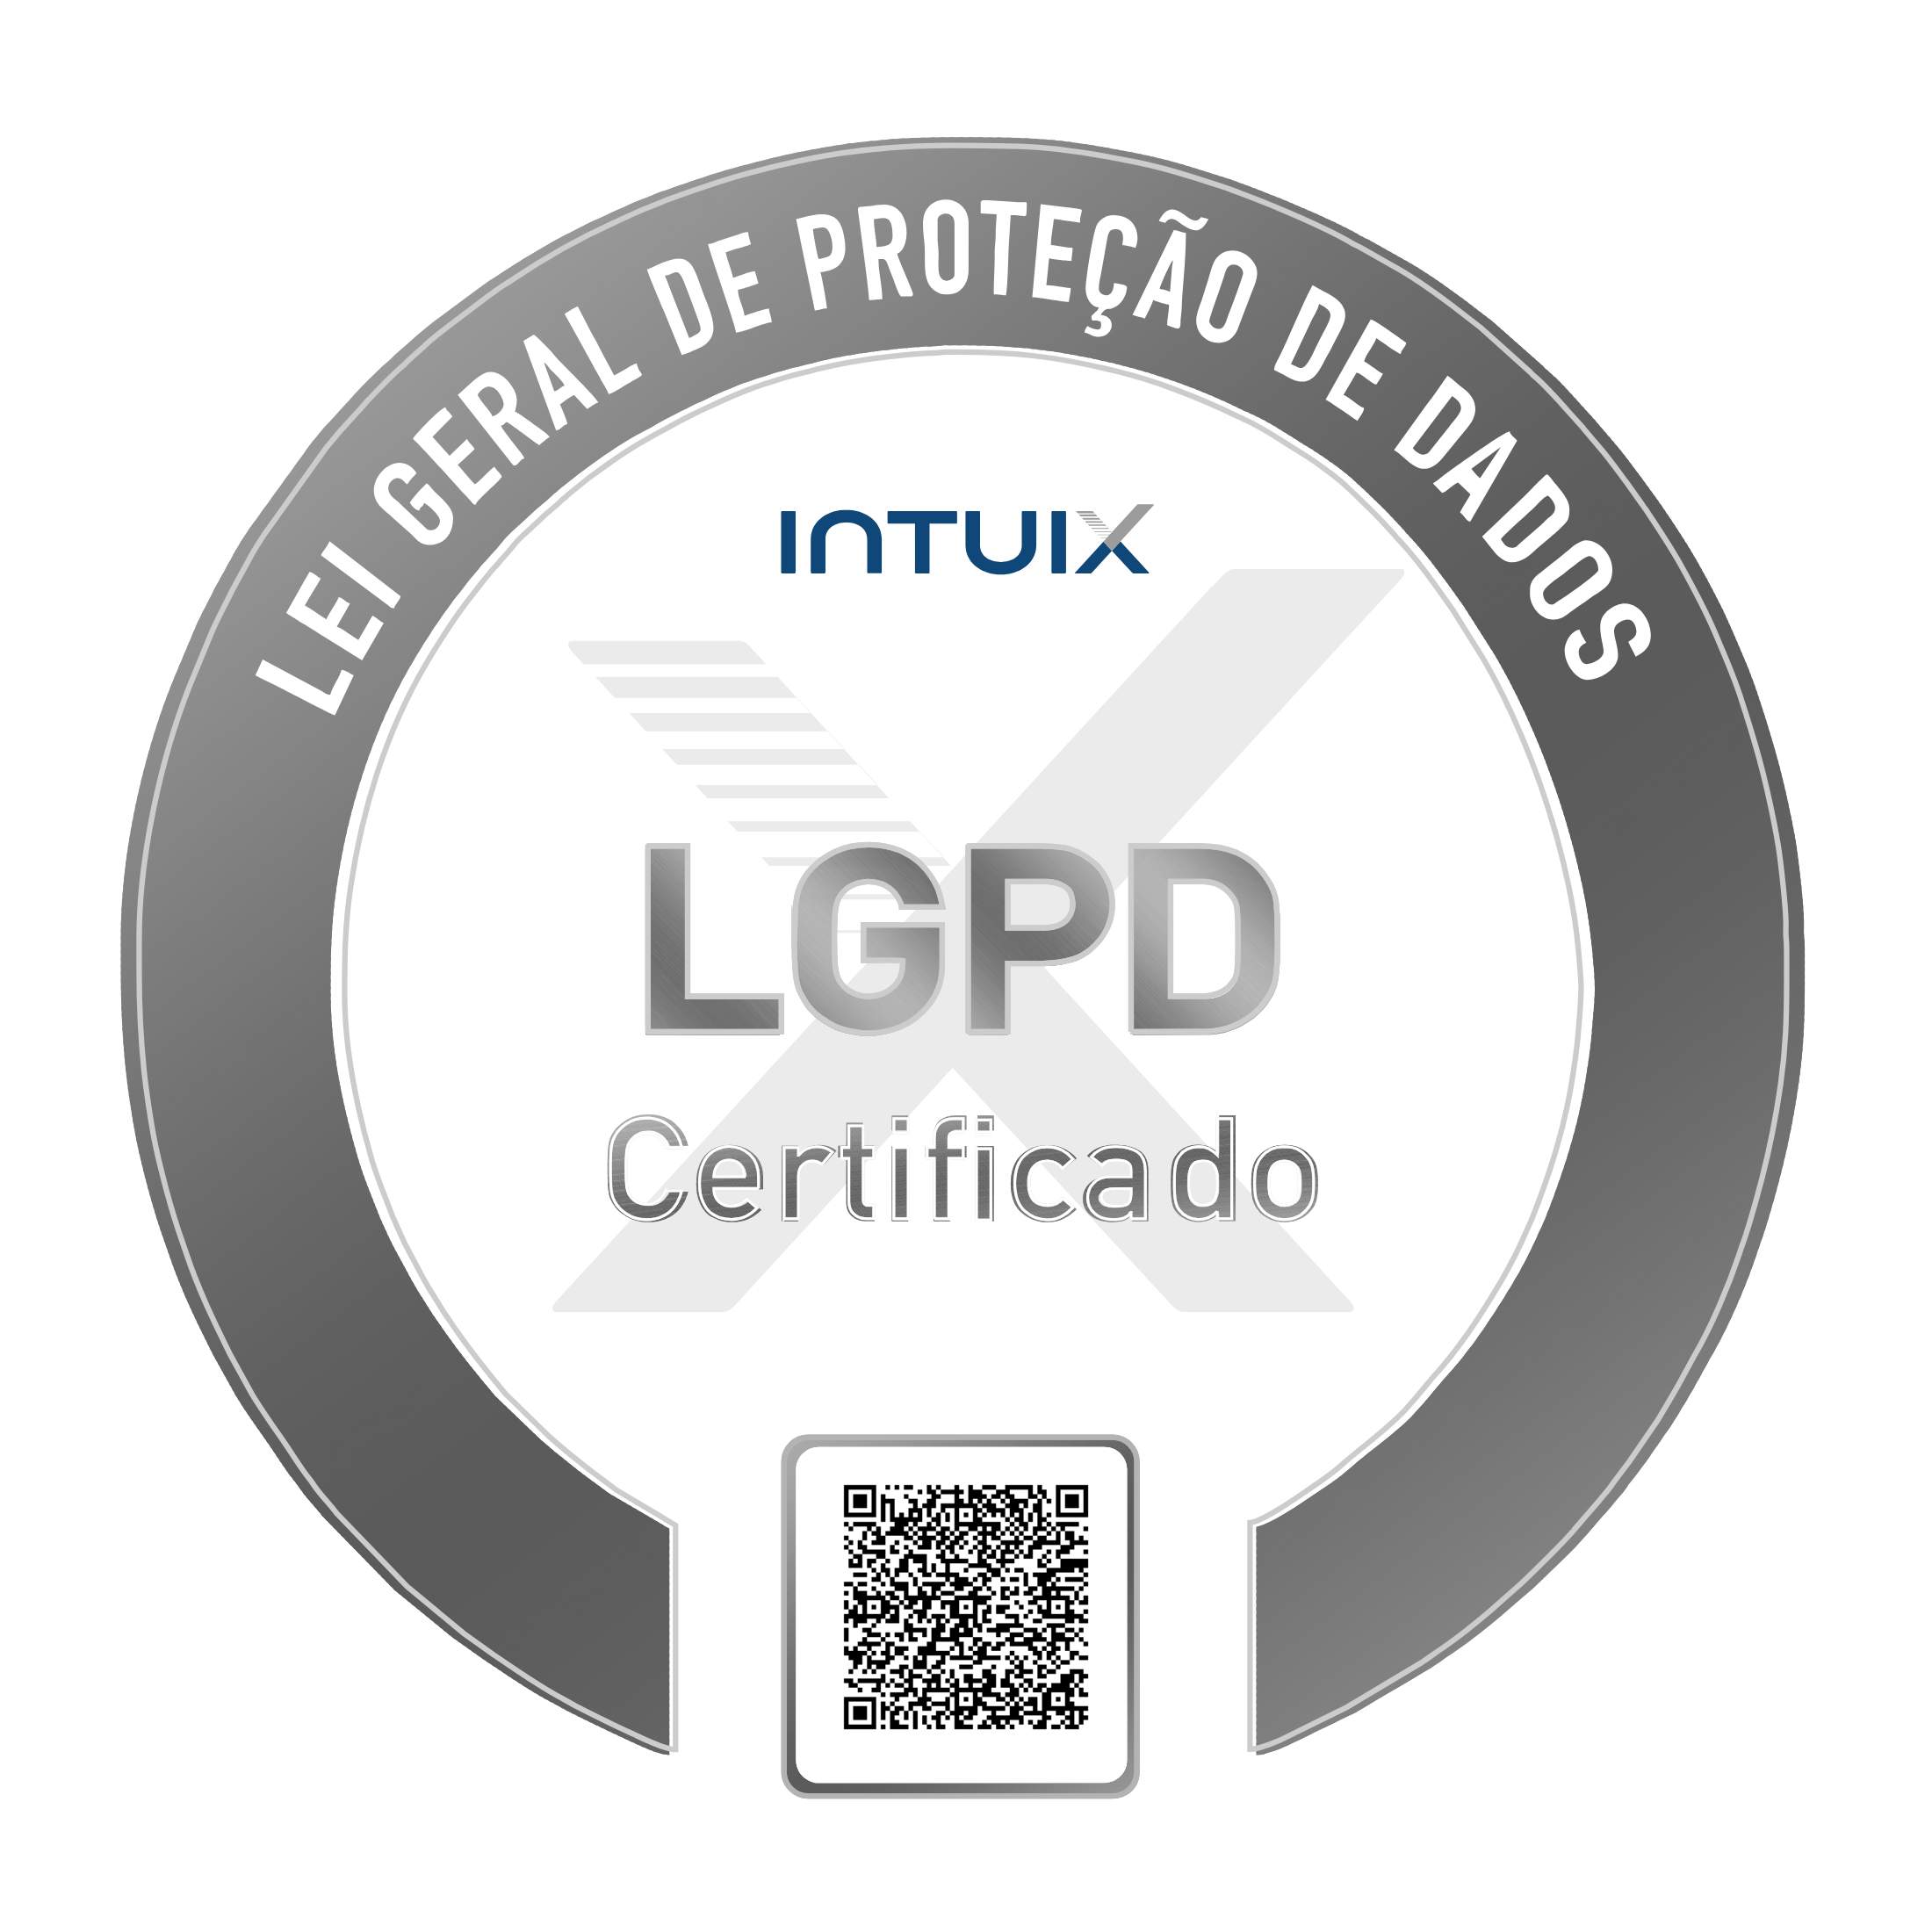 Certificado LGPD